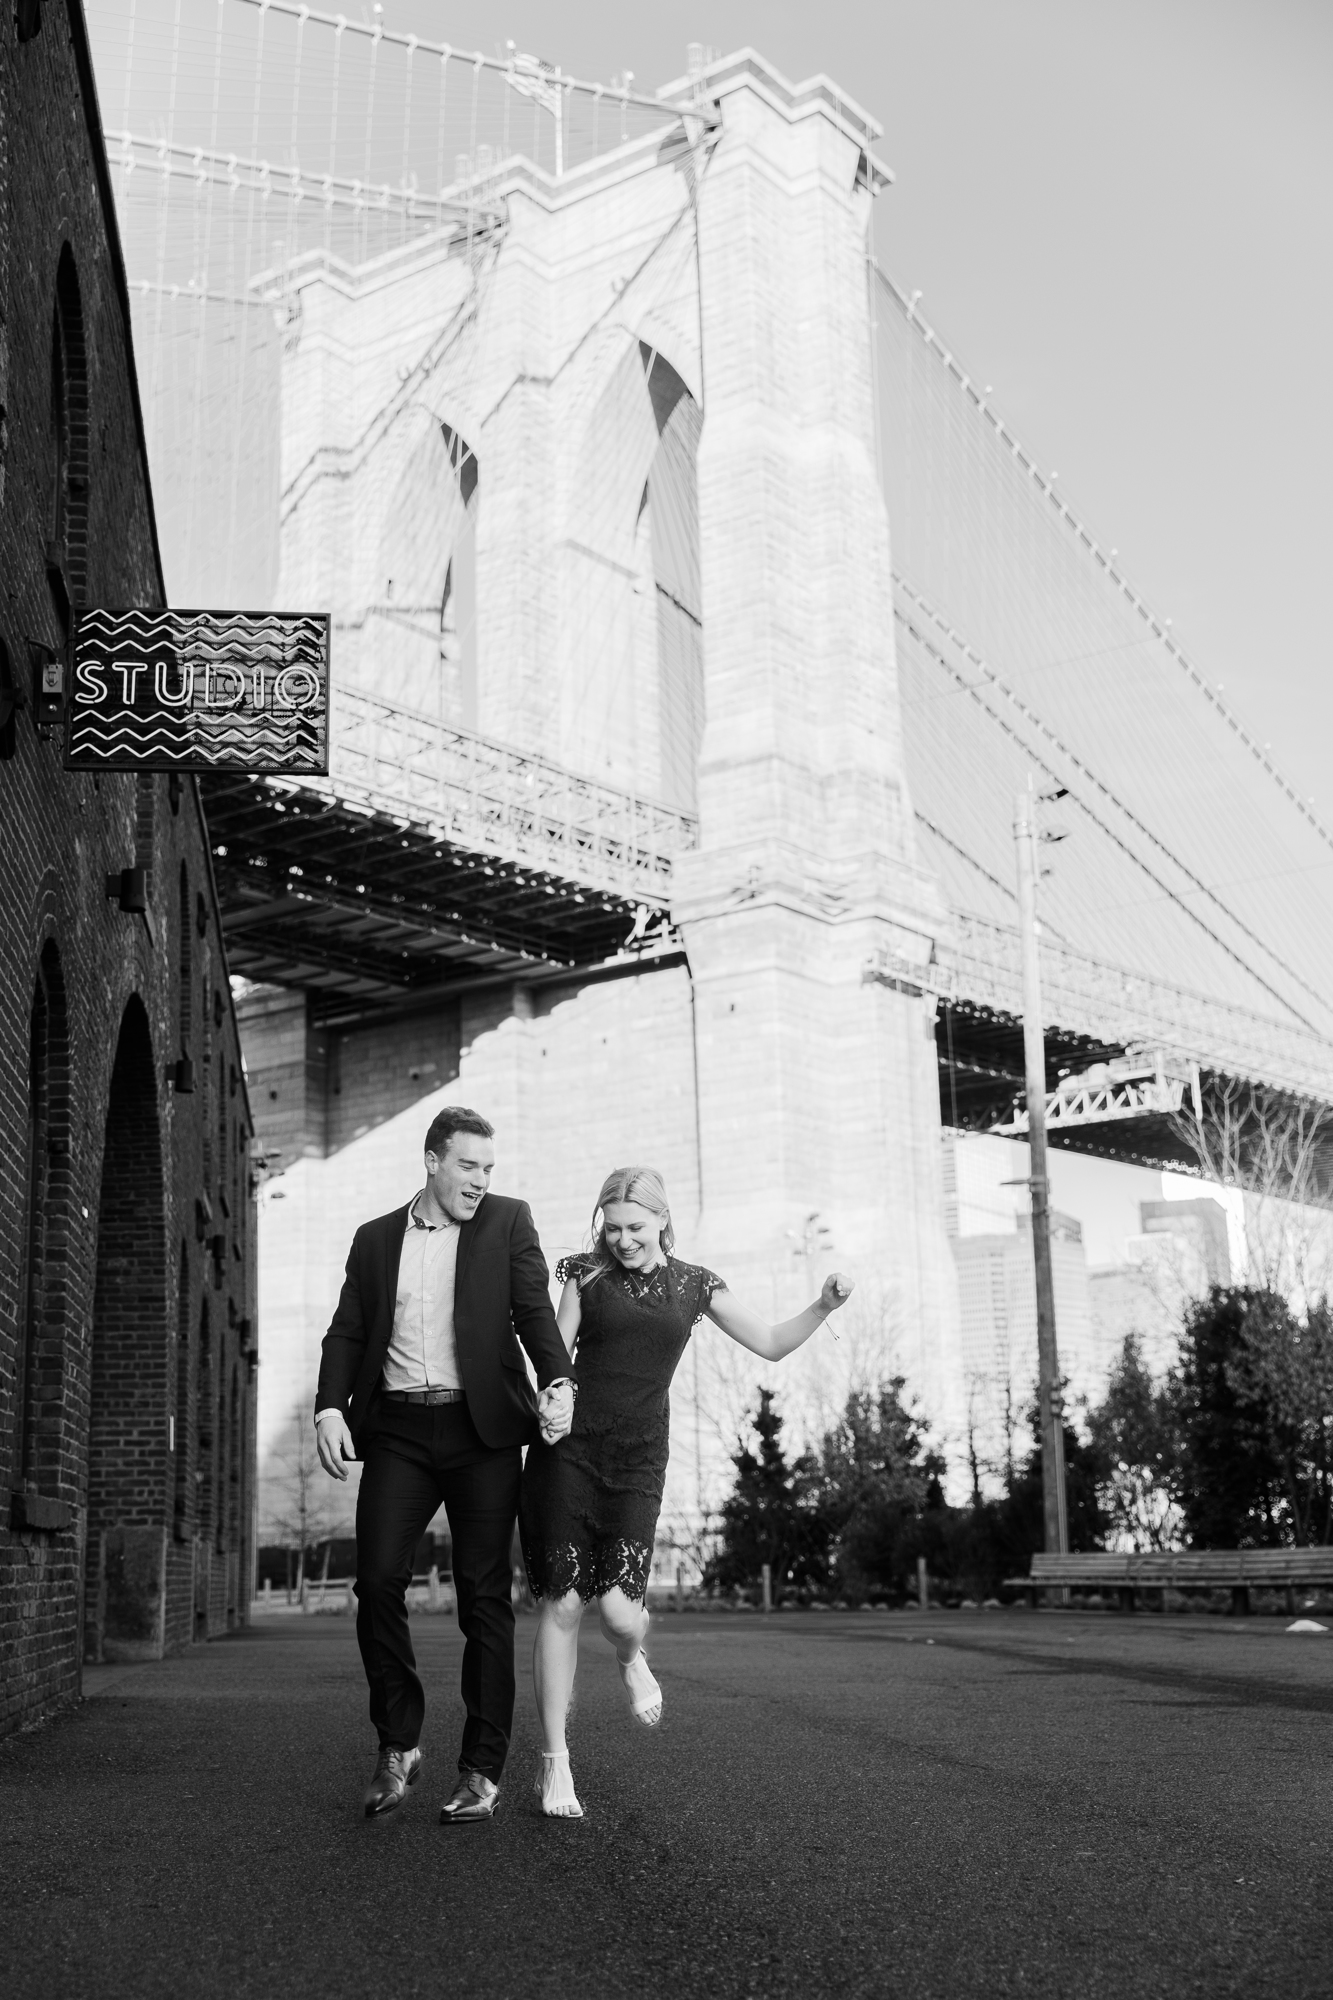 Playful Brooklyn Bridge Engagement Photos in Late Fall